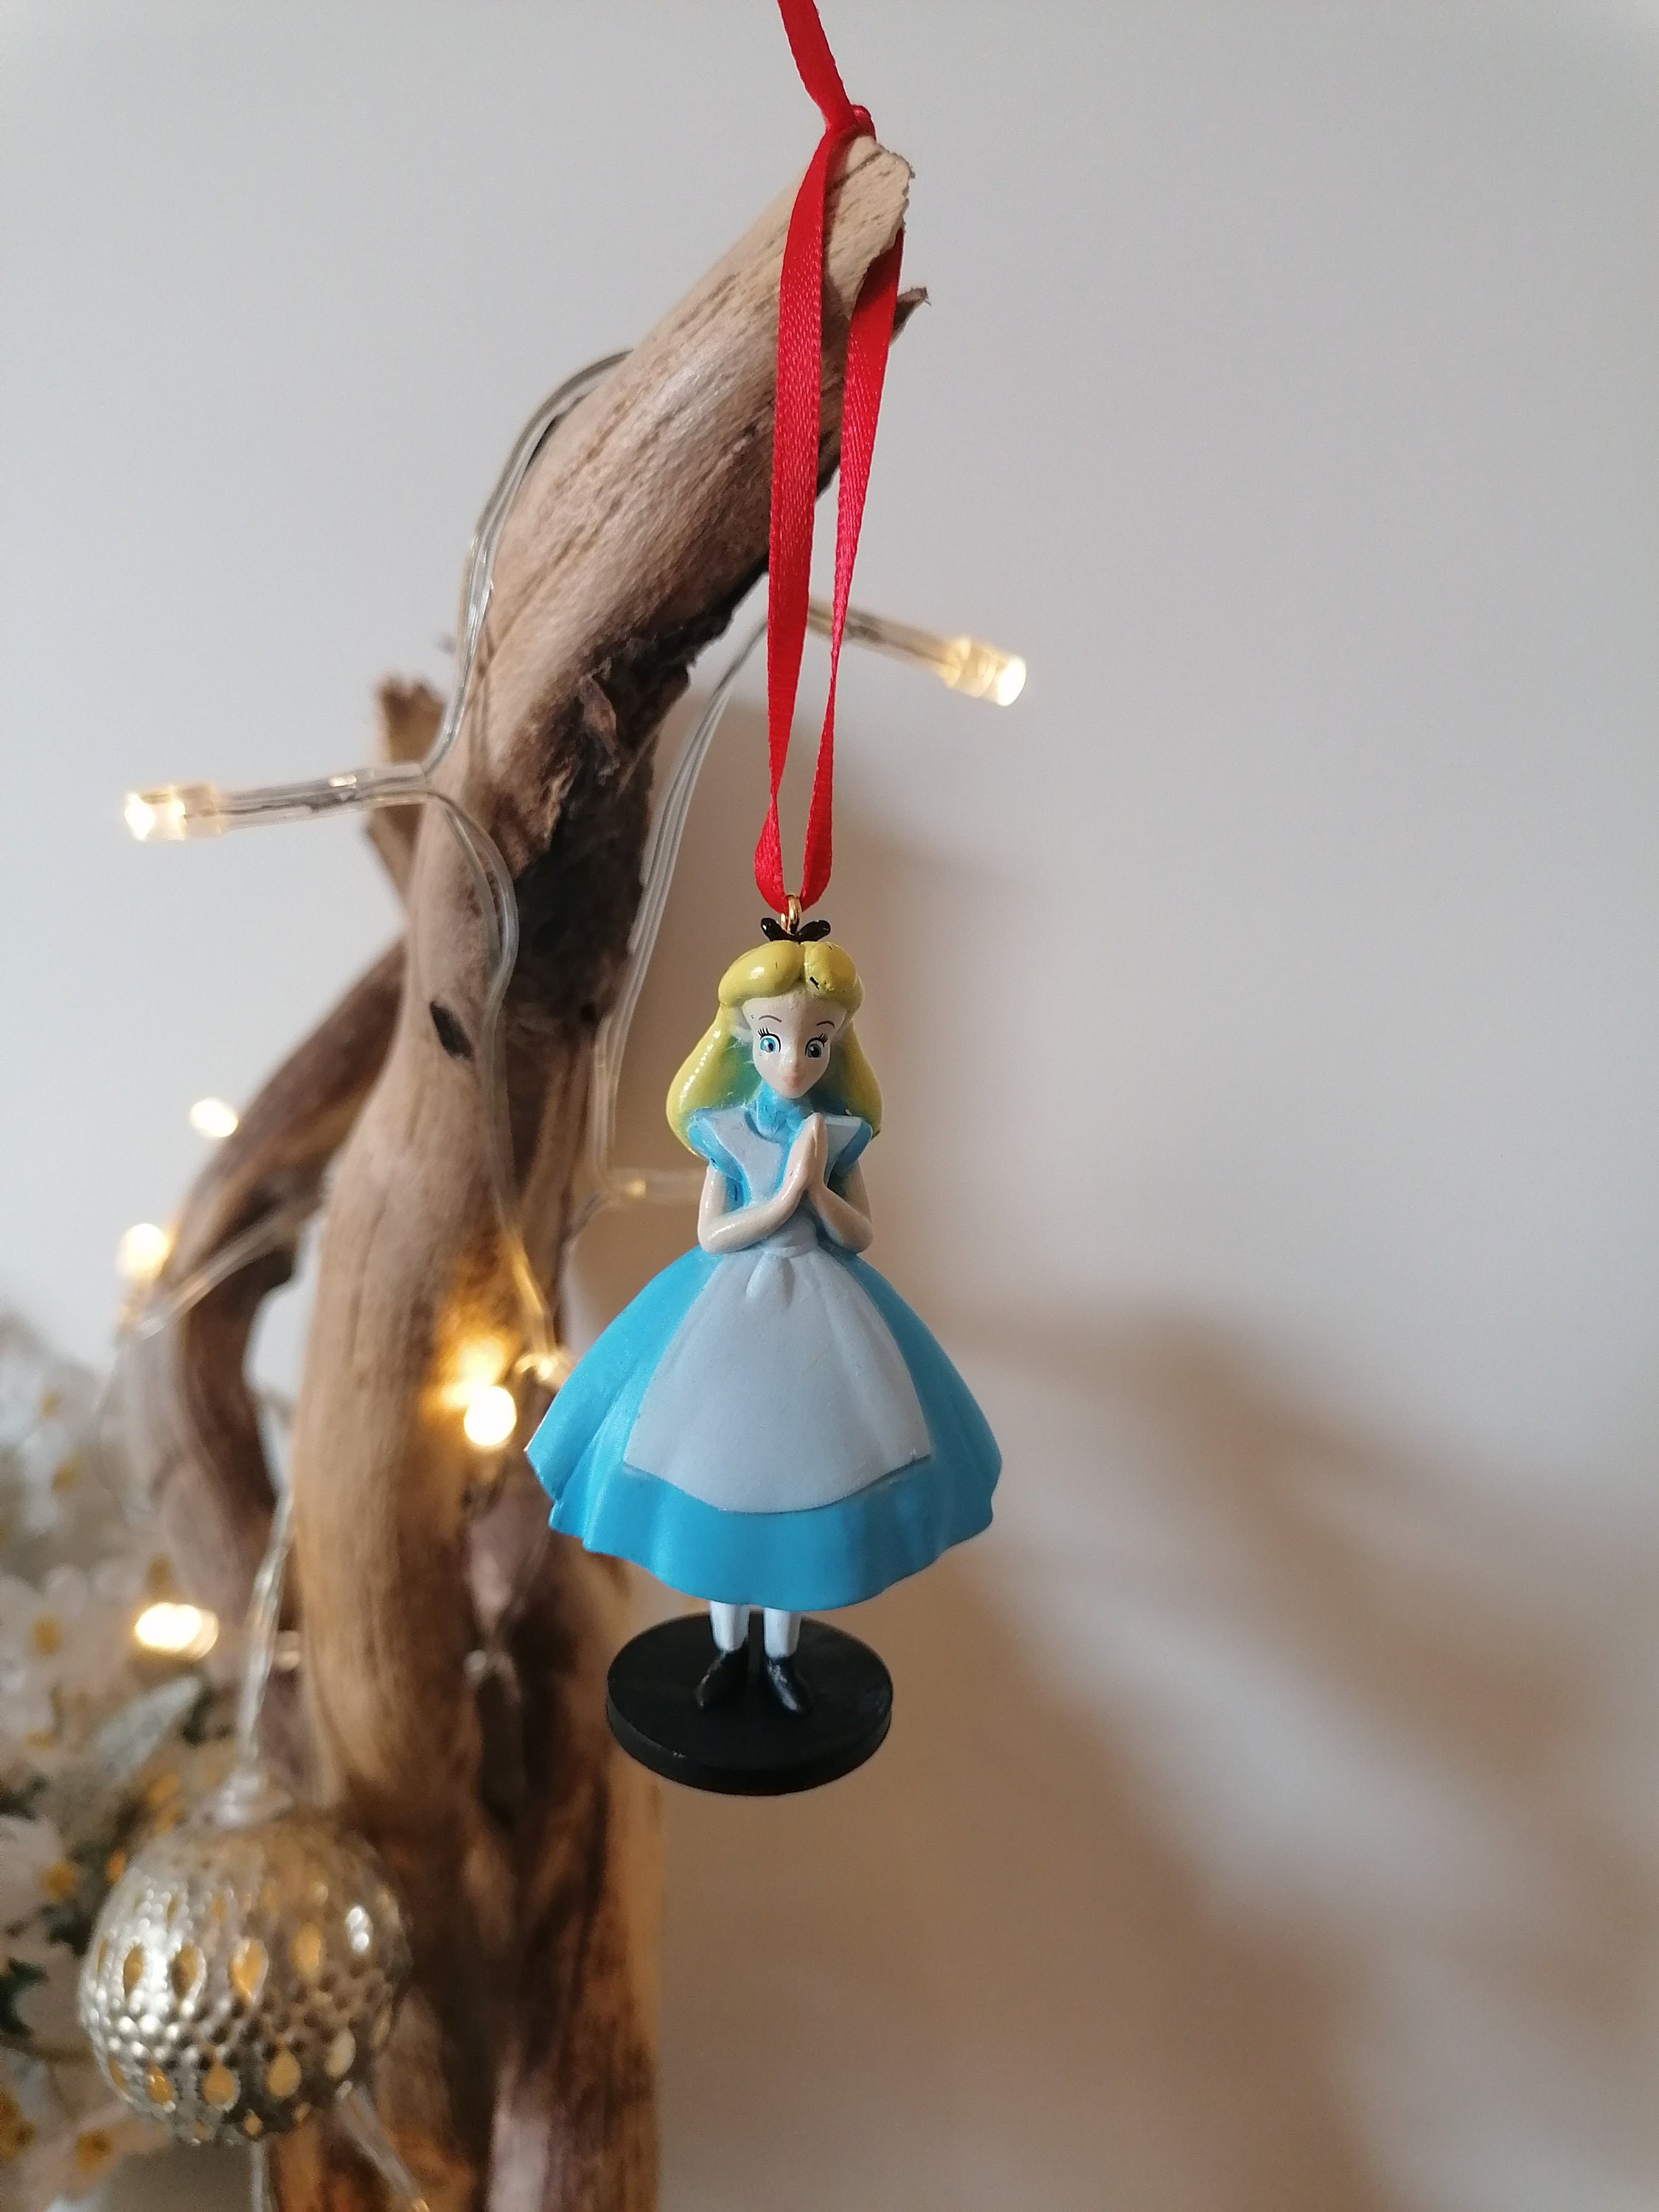 Alice In Wonderland Ornament Set